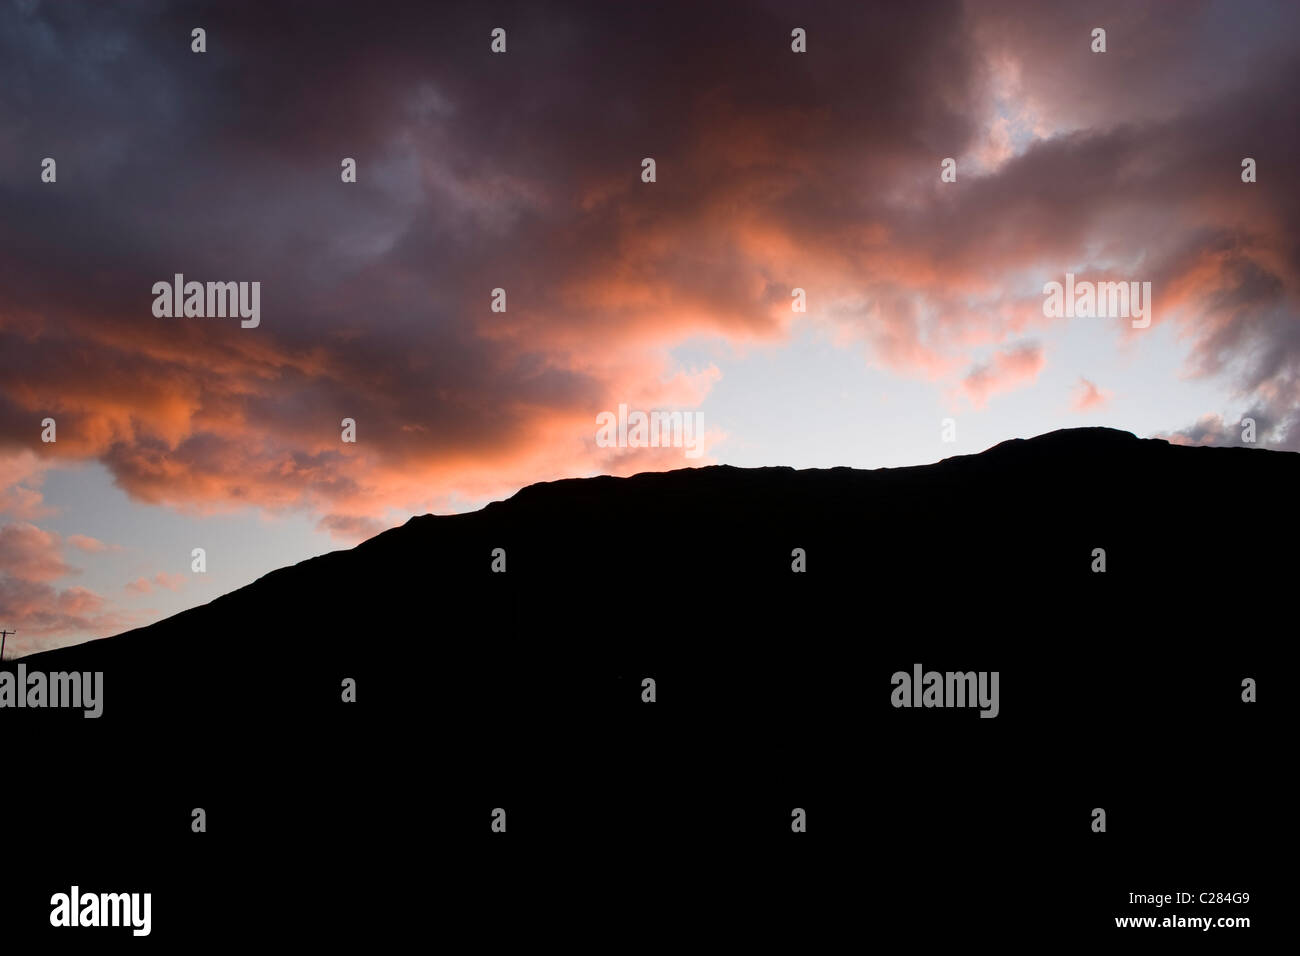 Sonnenuntergang Berge Schottlands Hügel rote Wolke Himmel Silhouette dunkel schwarz lebendig reflektieren lila felsige Felsspitze Felsvorsprung hoch hoch Stockfoto